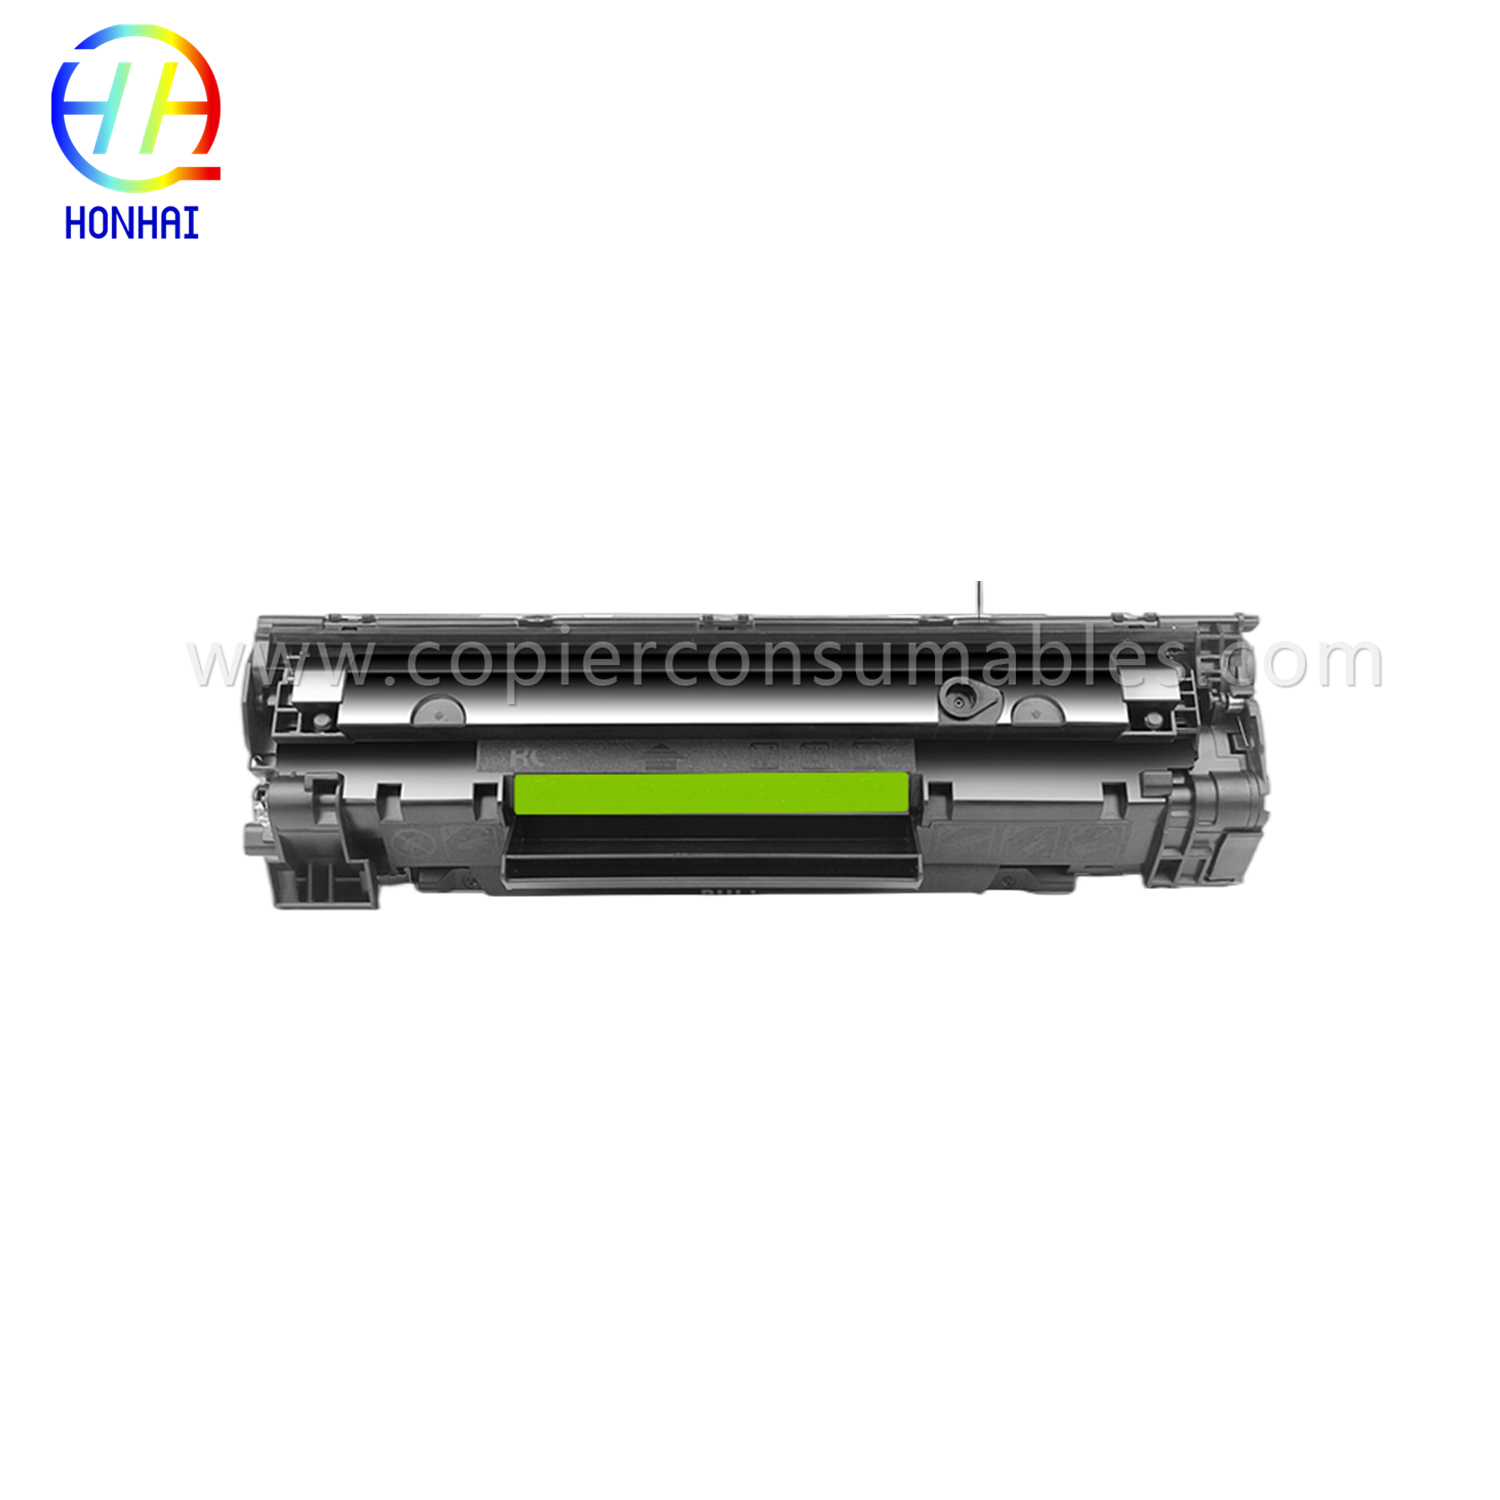 Toner Cartridge for HP Laserjet P1005 (CB435A 35A) OEM